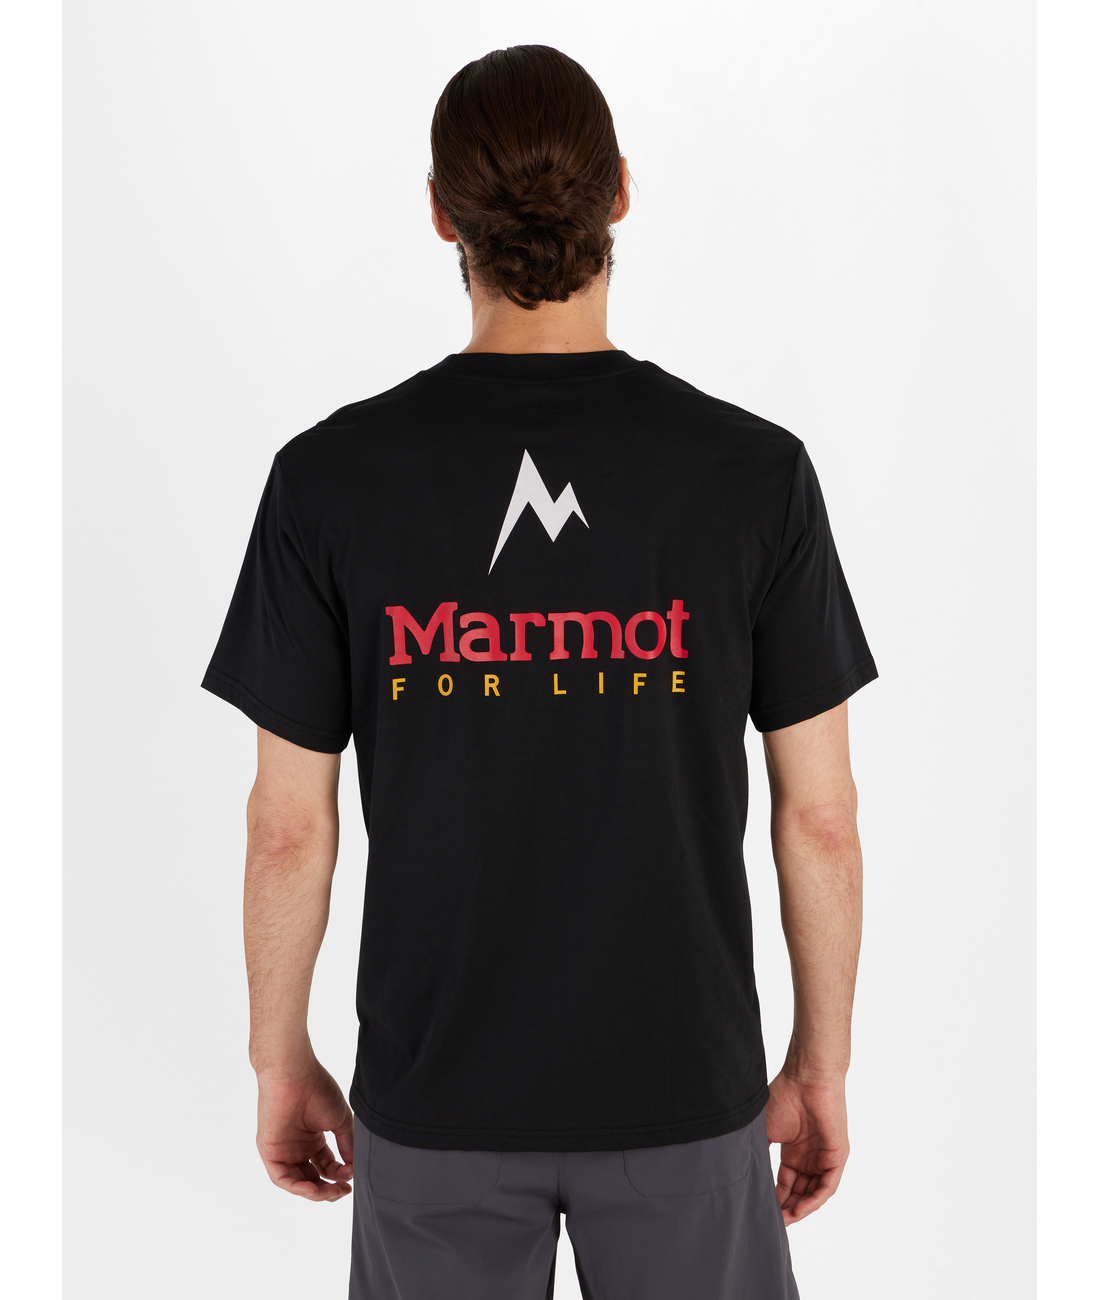 Marmot for Life Tee S/S